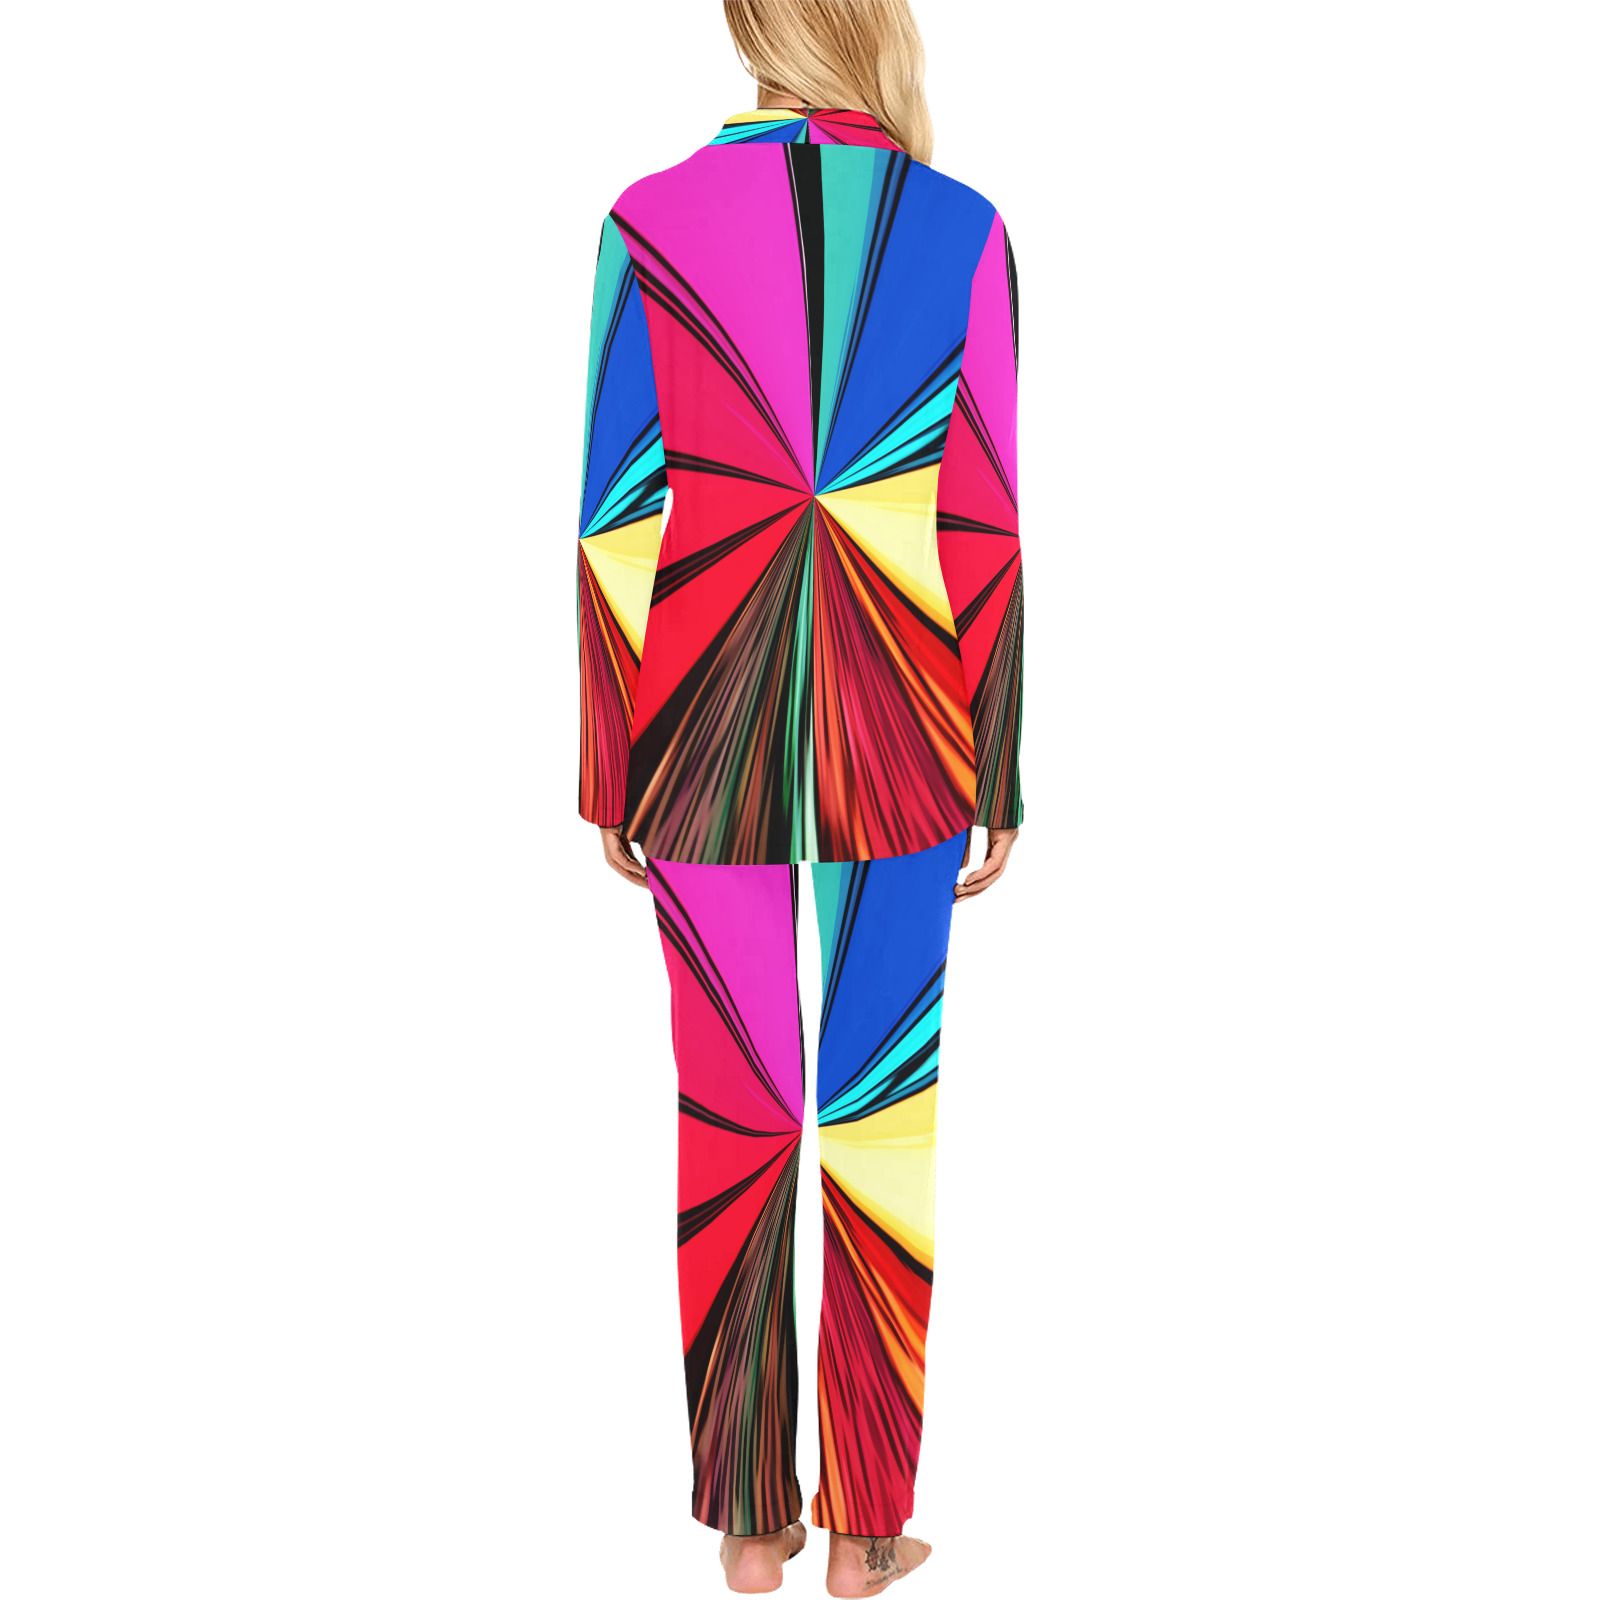 Colorful Rainbow Vortex 608 Women's Long Pajama Set